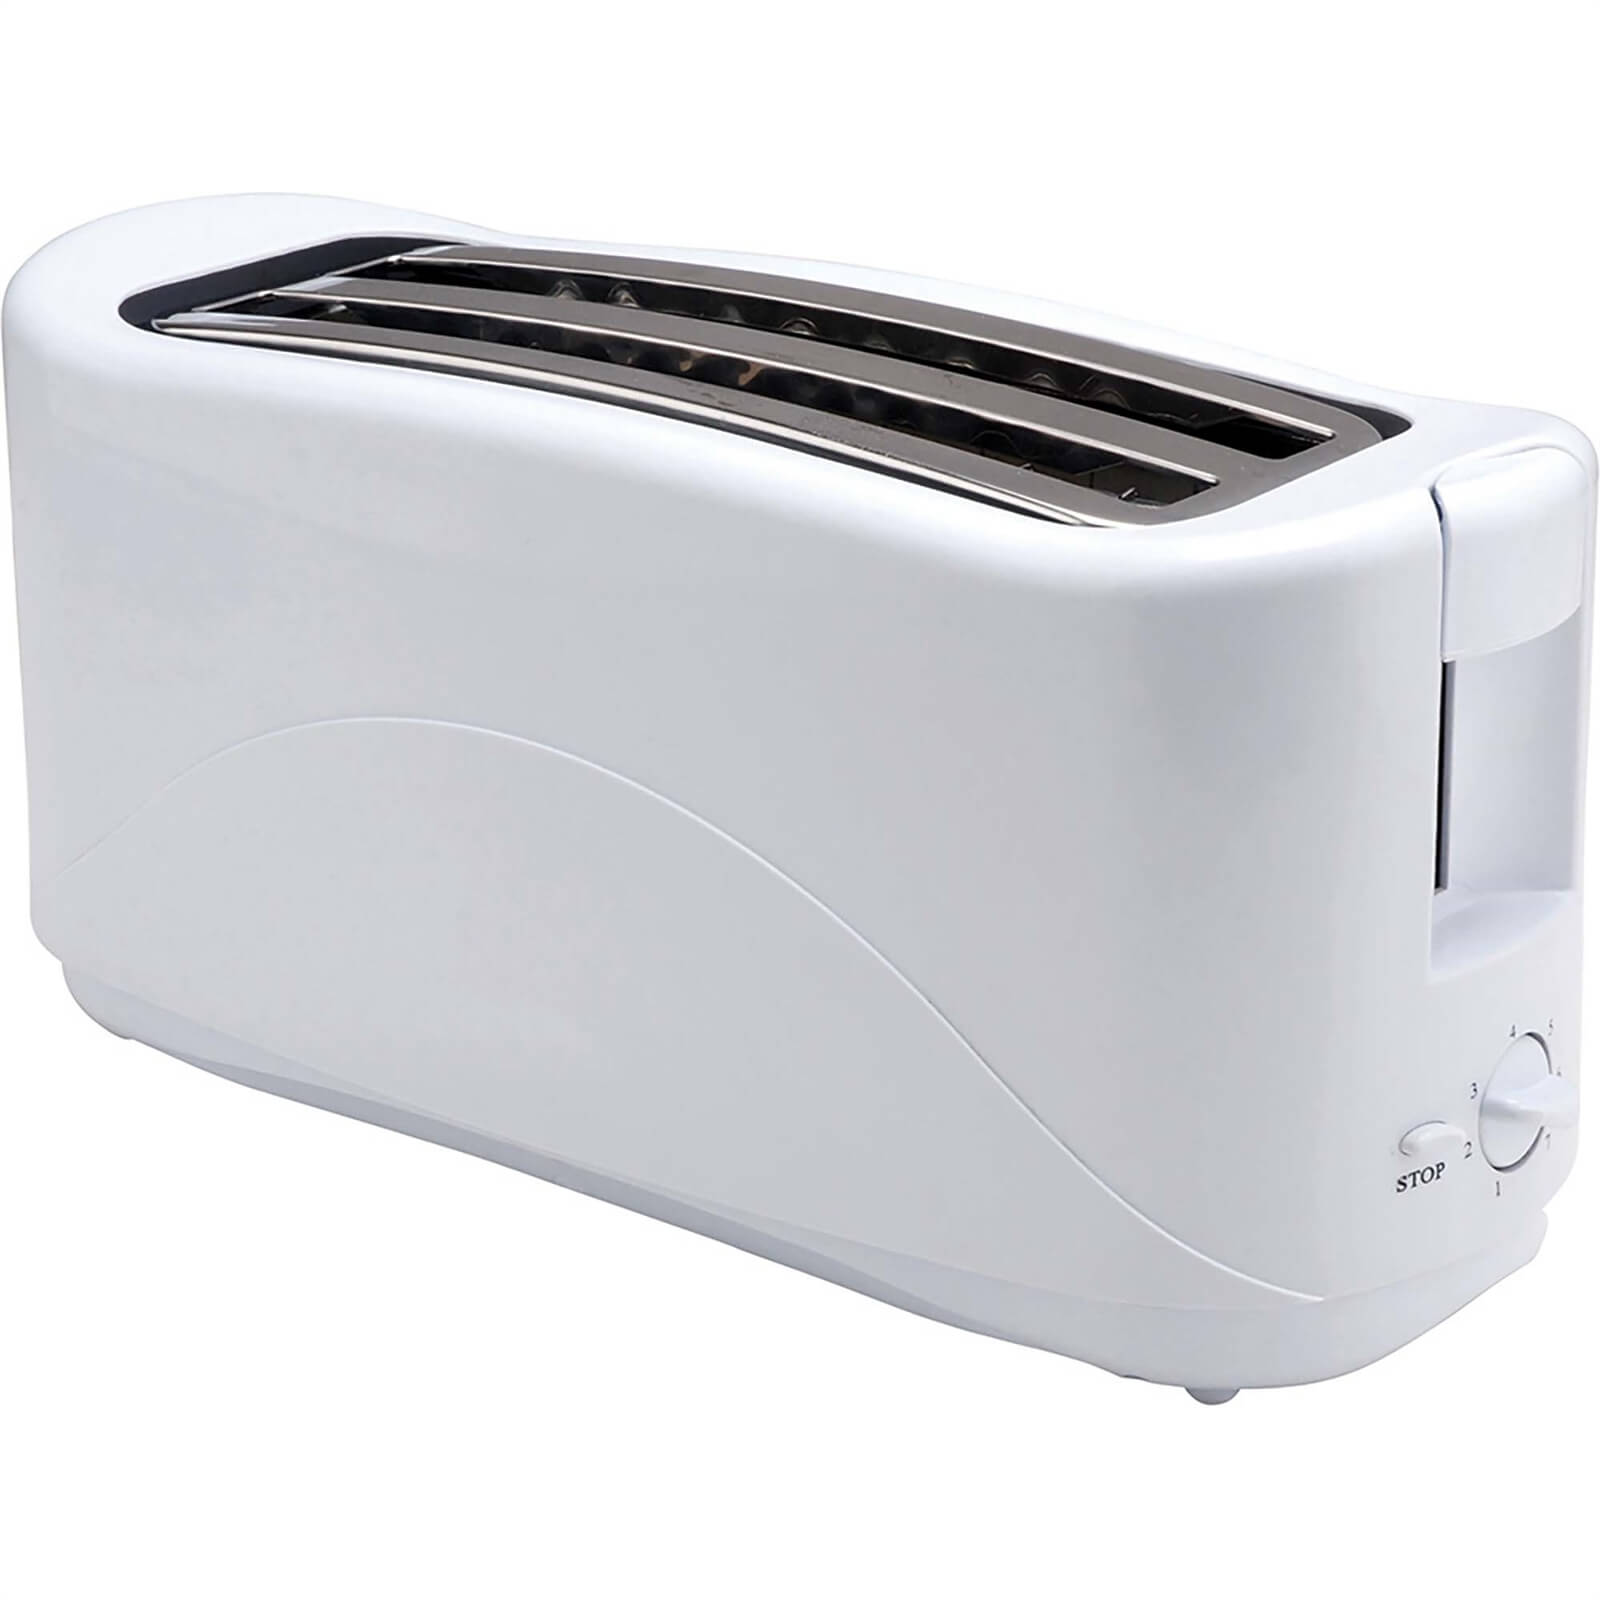 Infapower 4 Slice Toaster - White